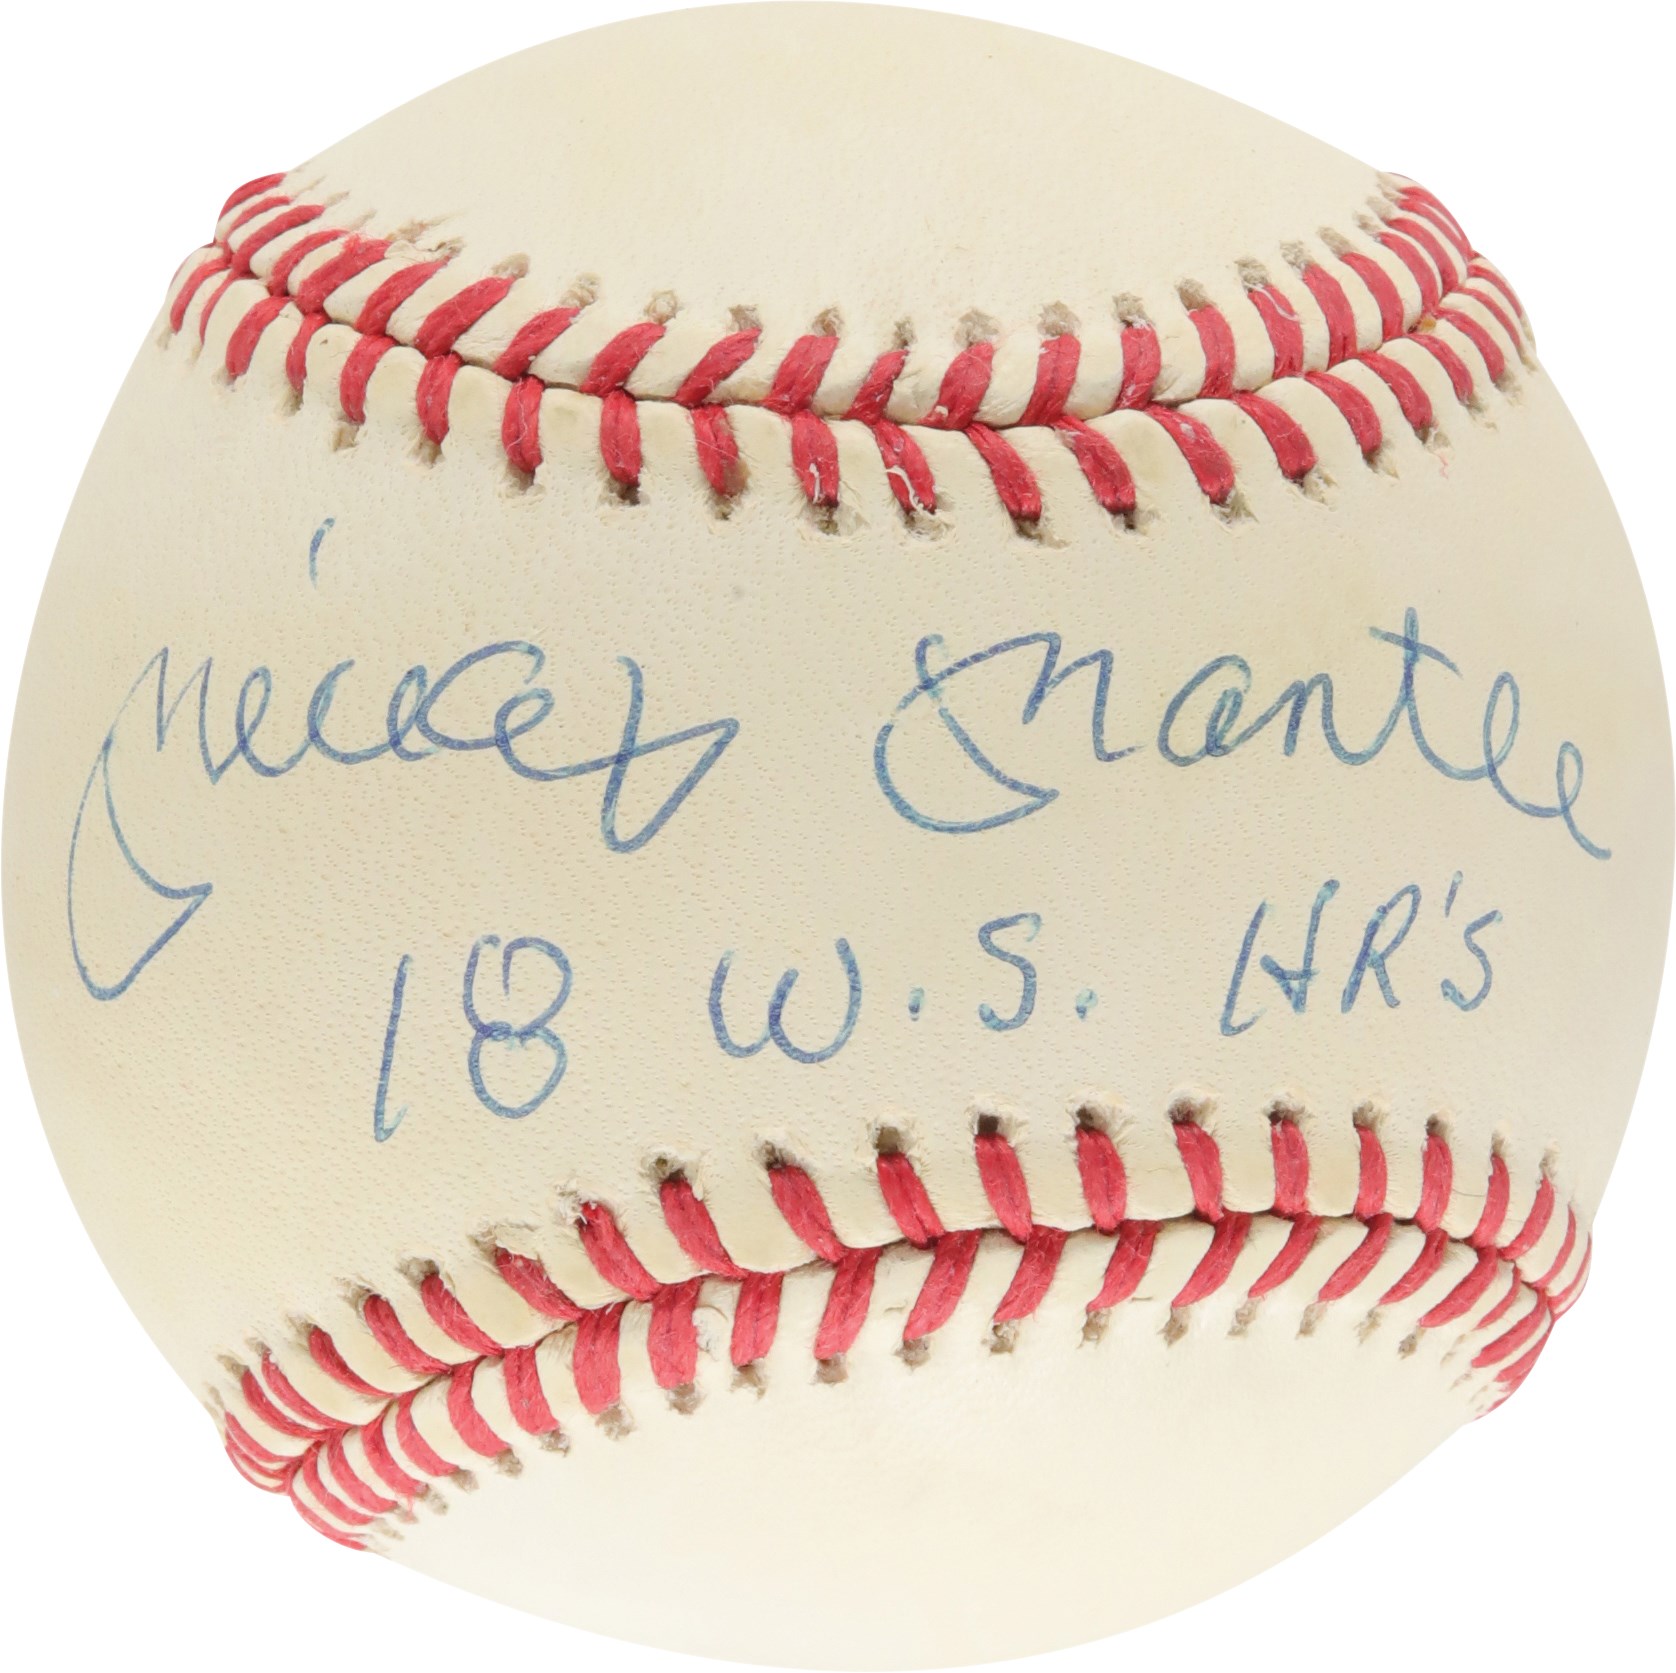 - Mickey Mantle "18 W.S. HR's" Single-Signed Baseball (PSA)